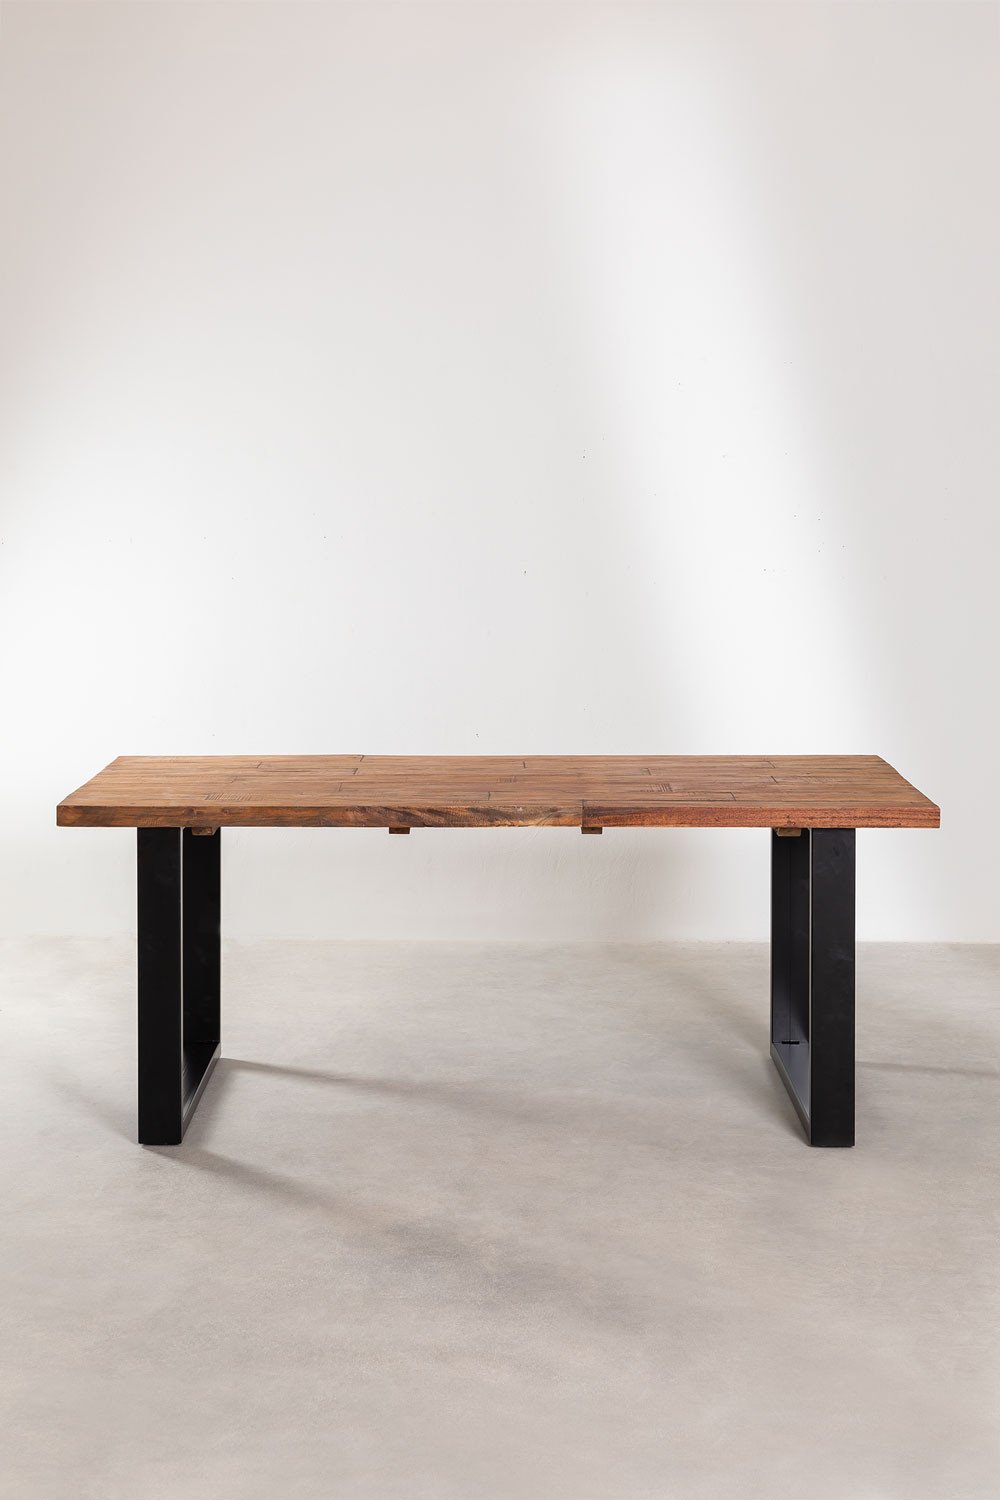  Pata de mesa estilo X de madera recuperada